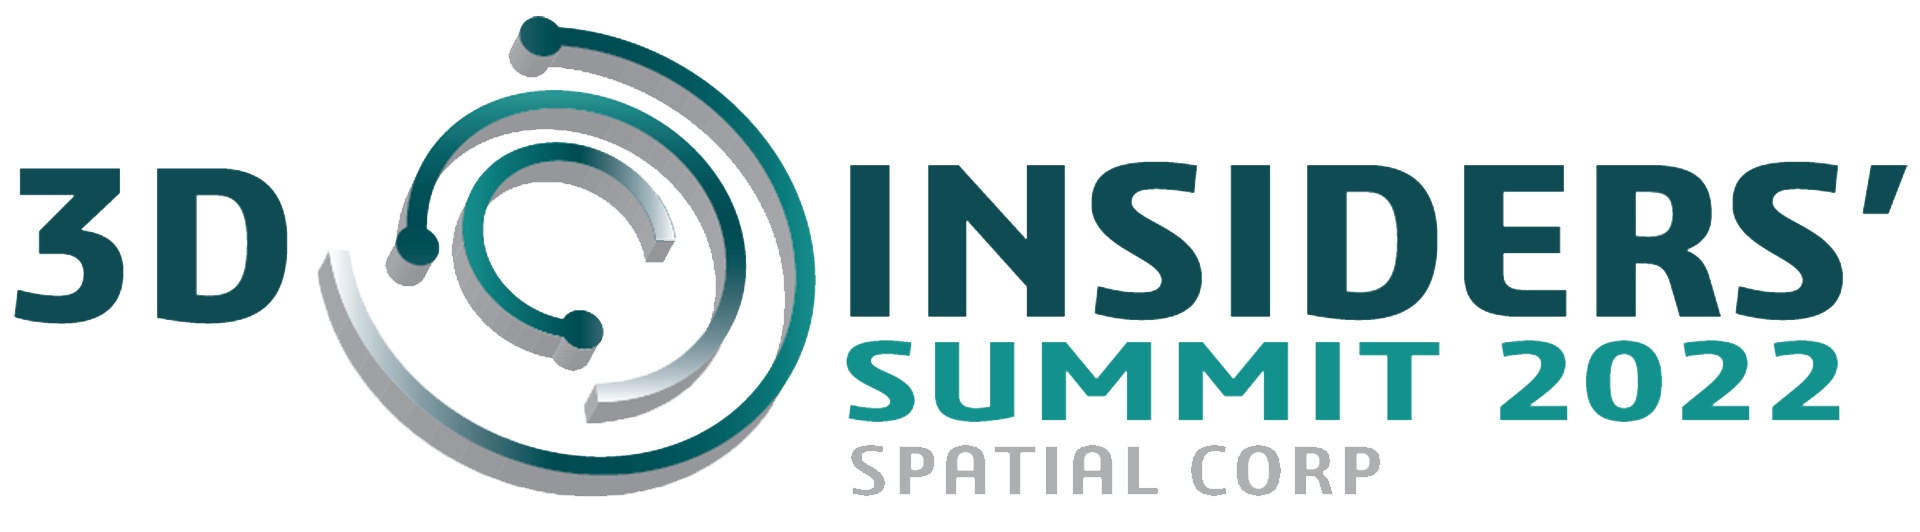 3D Insiders Summit 2022 Logo Transparent